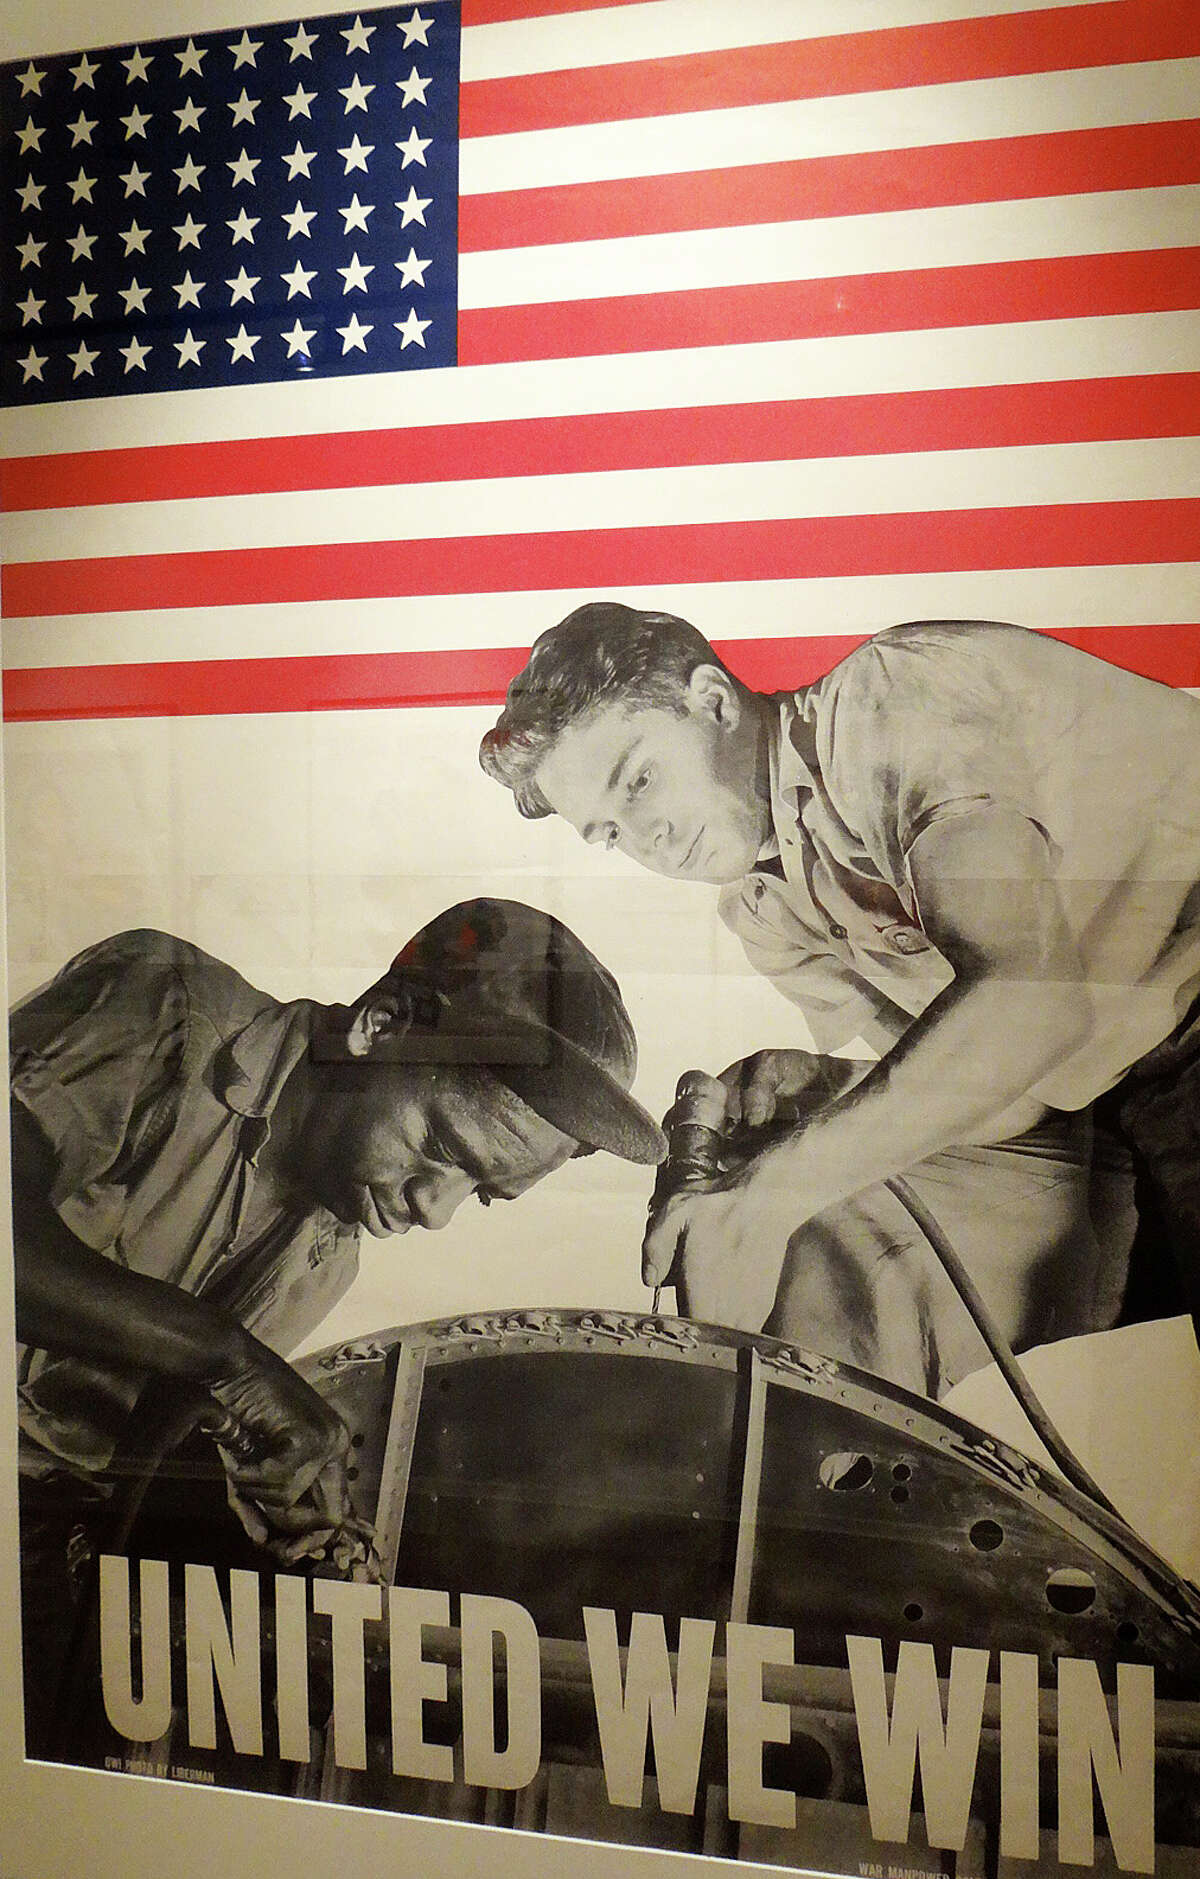 Fairfield Museum exhibit showcases poster art of WWII